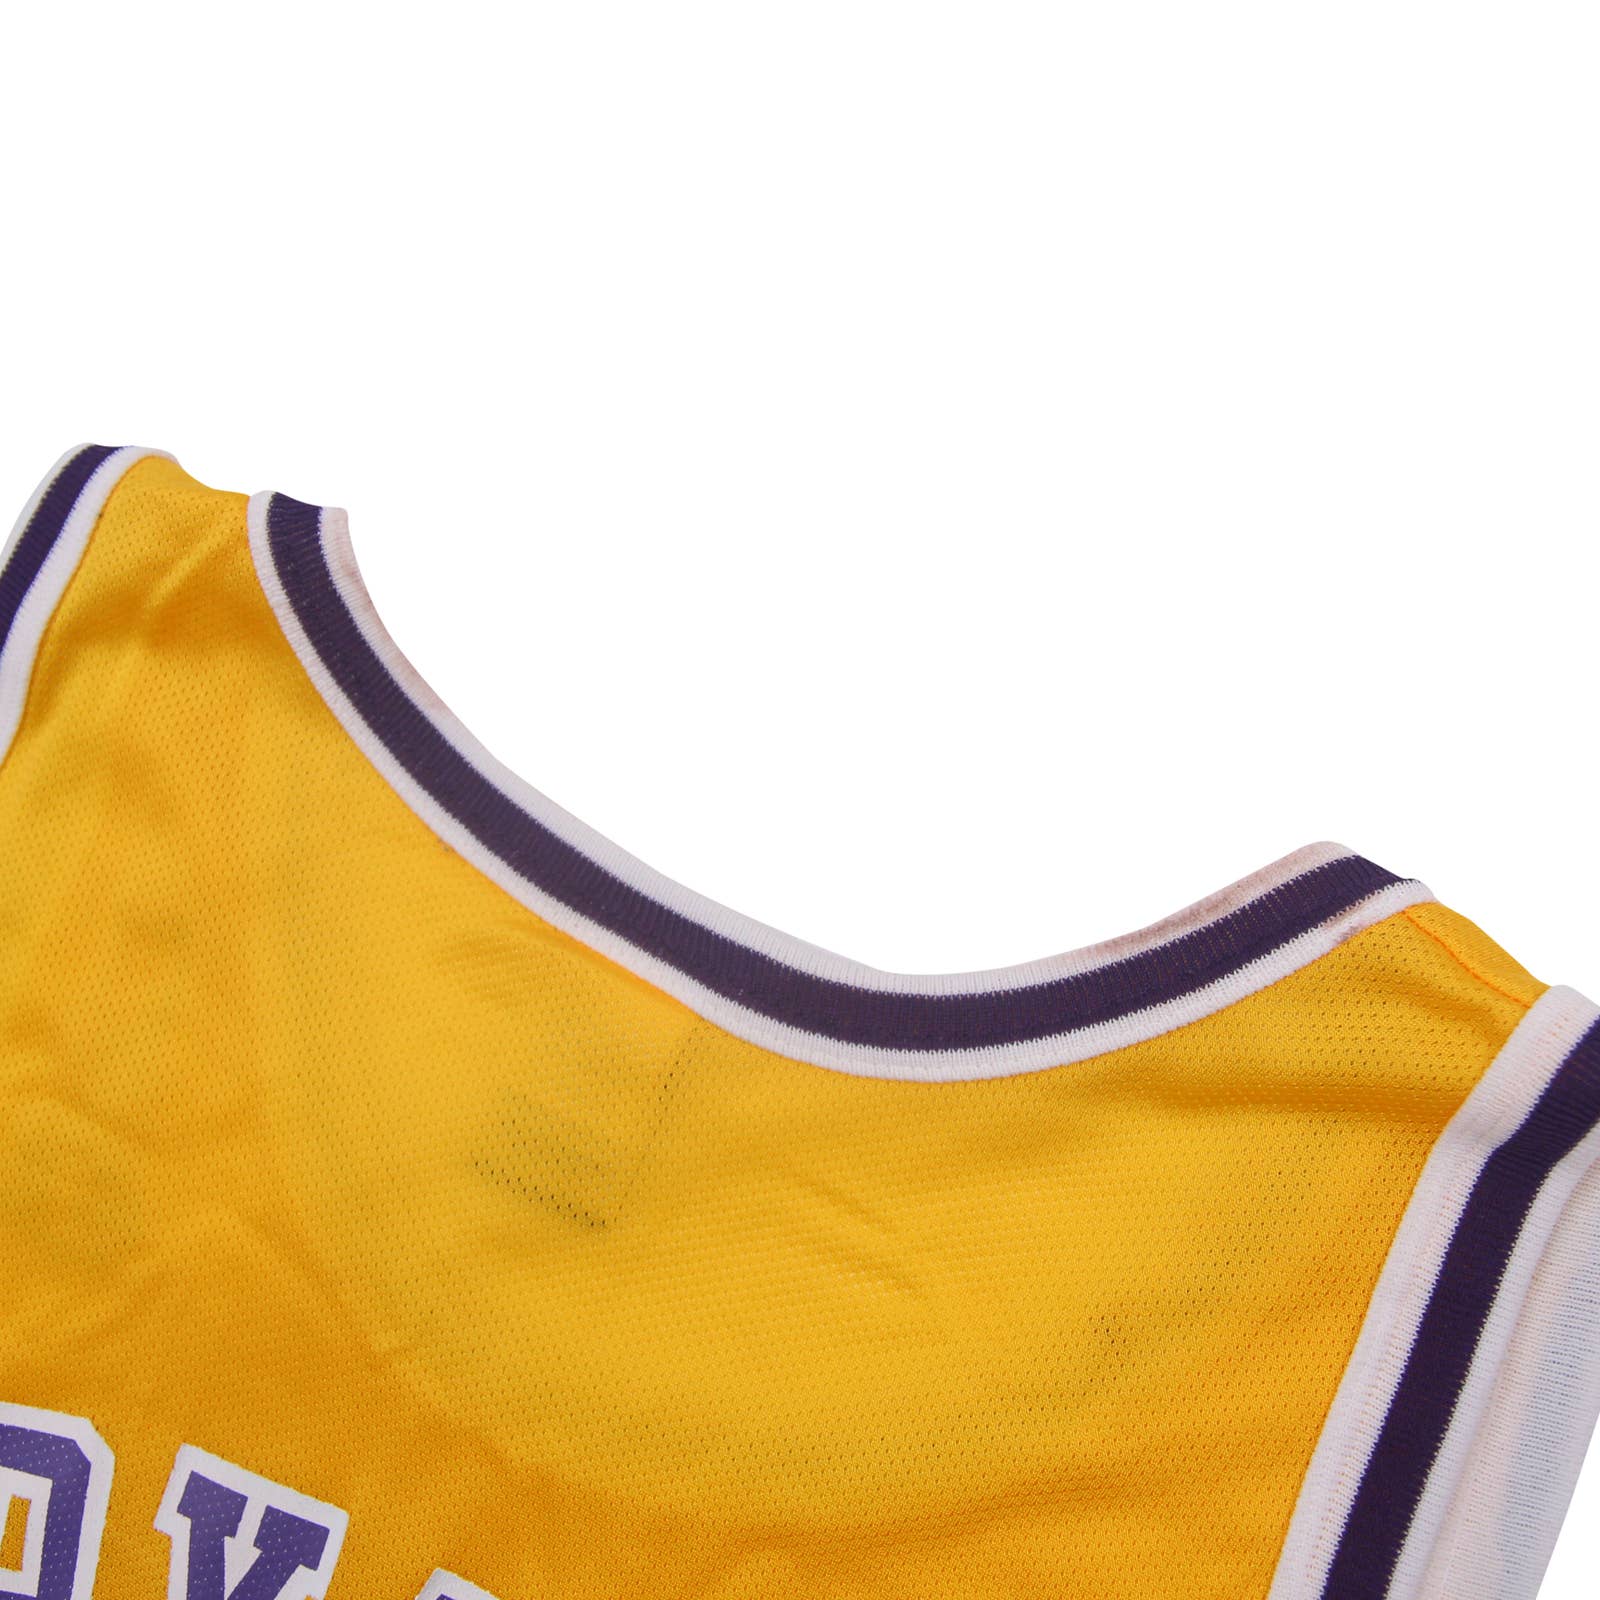 Vintage Los Angeles Lakers Kobe Bryant #8 Champion NBA Jersey Youth Large  14-16